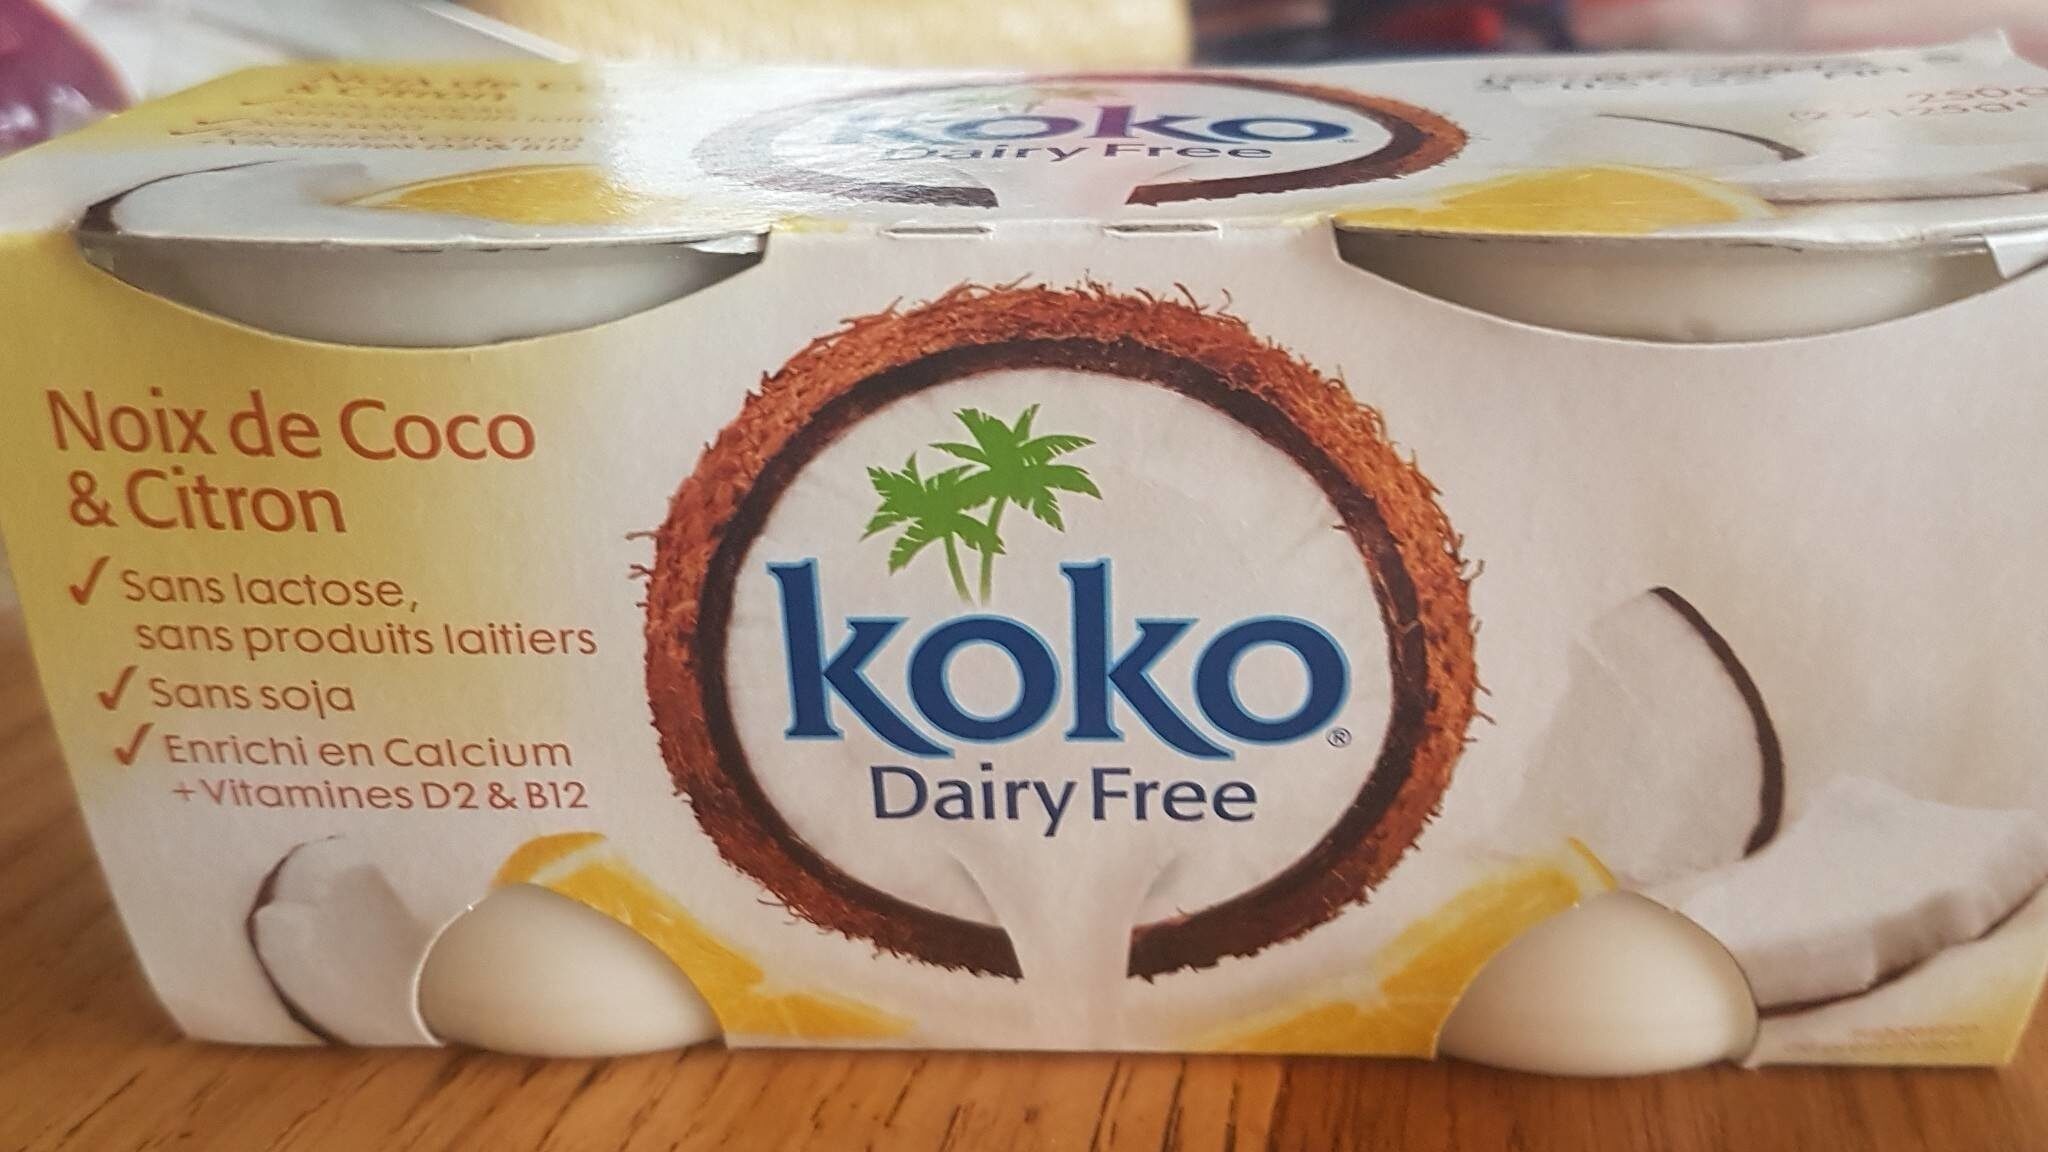 Koko Dairy free noix de coco & citron - Product - fr